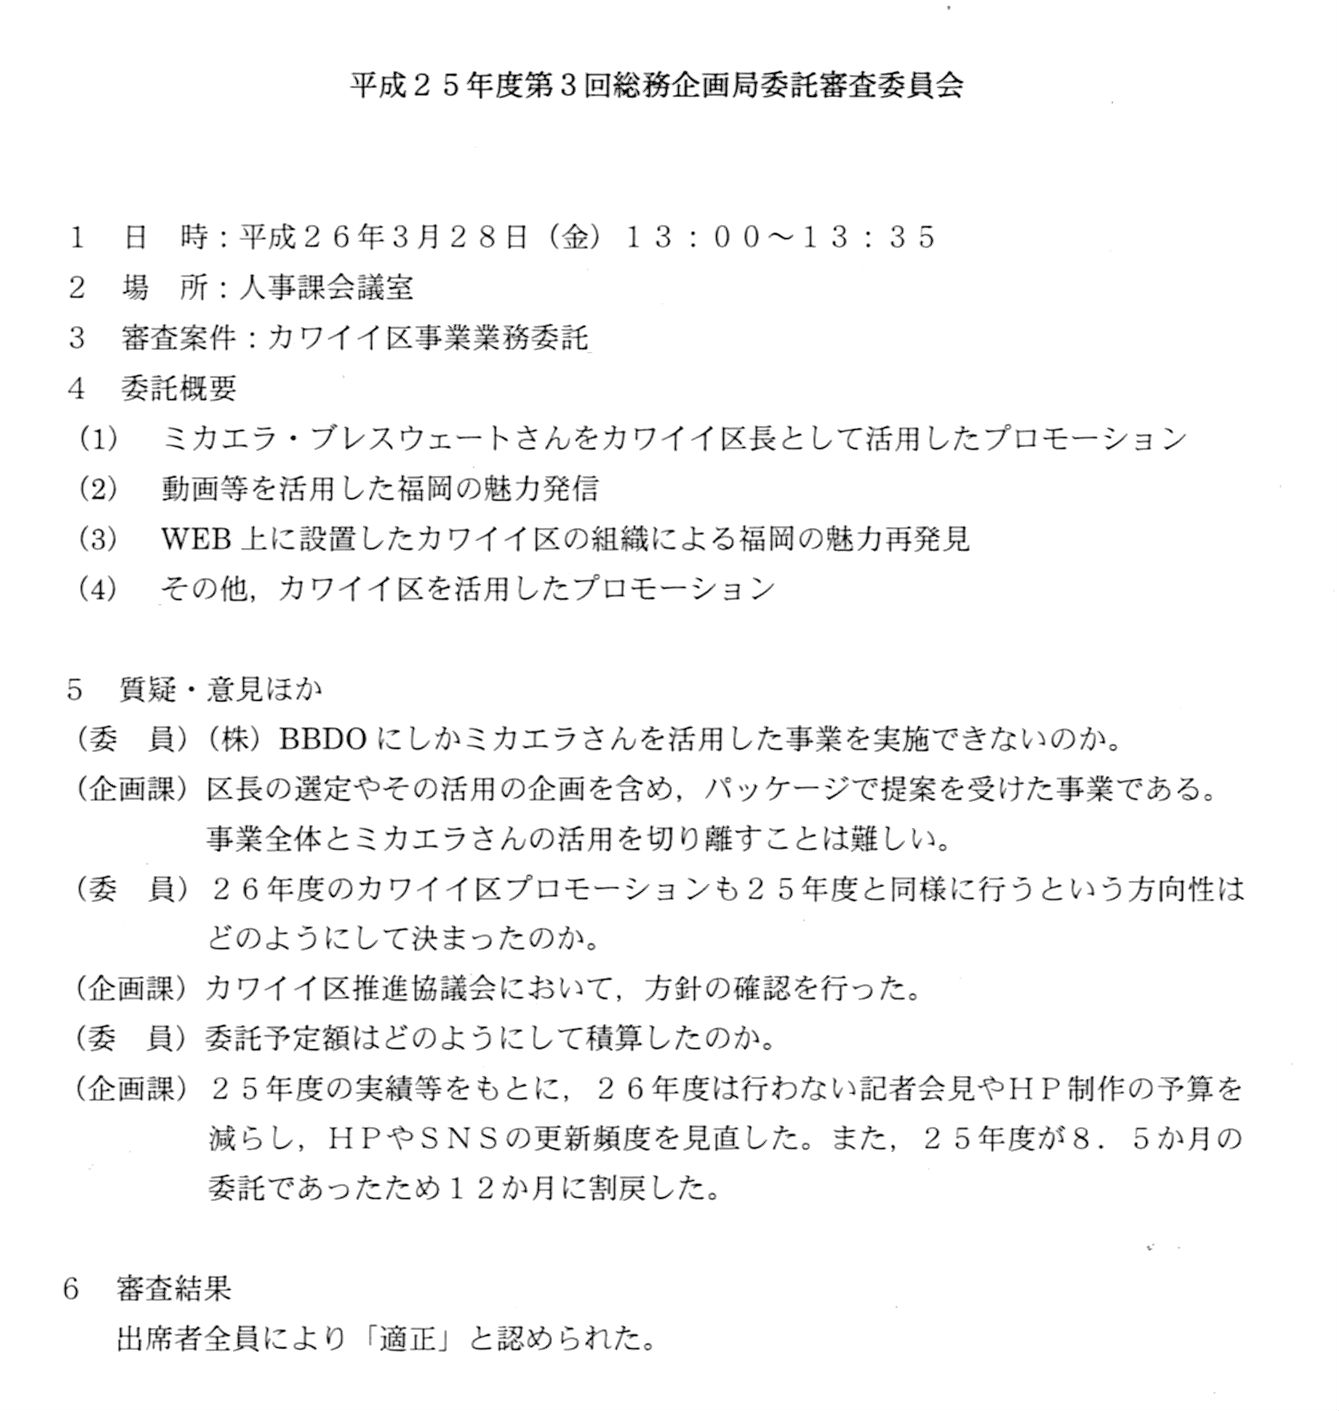 http://hunter-investigate.jp/news/2014/05/04/%E5%AF%A9%E6%9F%BB%EF%BC%91.jpg